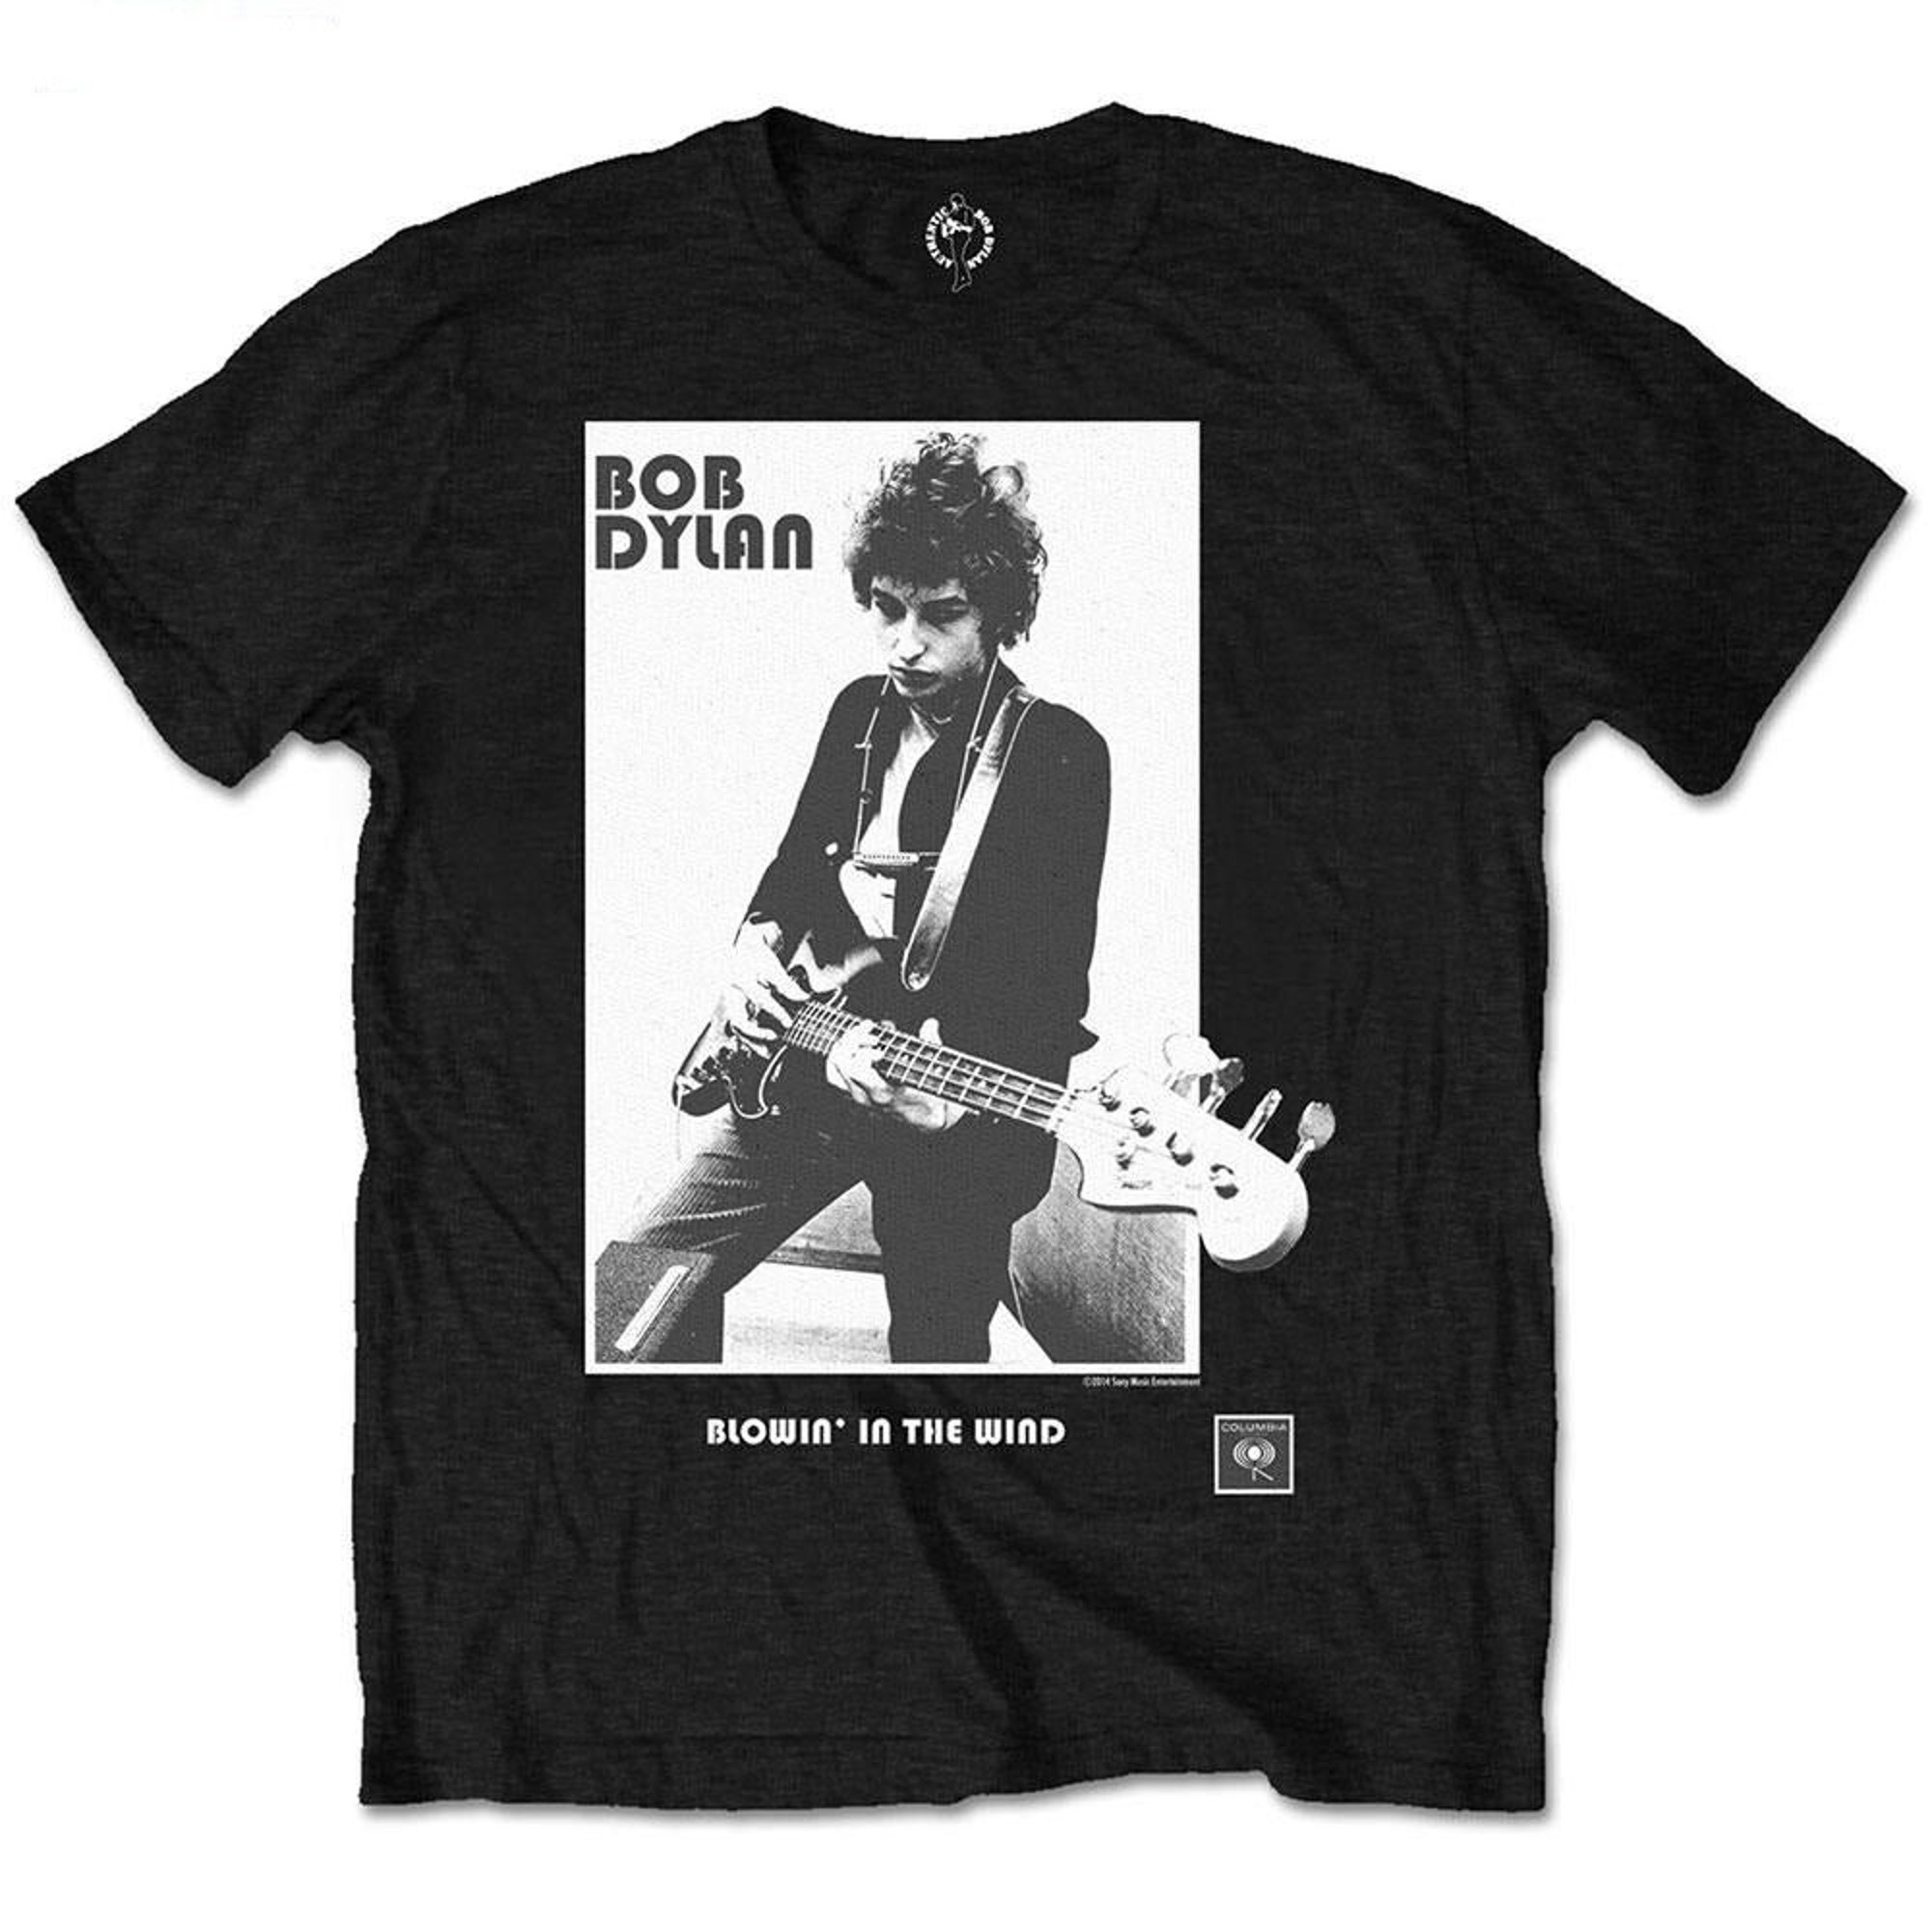 Bob Dylan Kids Tee: Blowing in the Wind